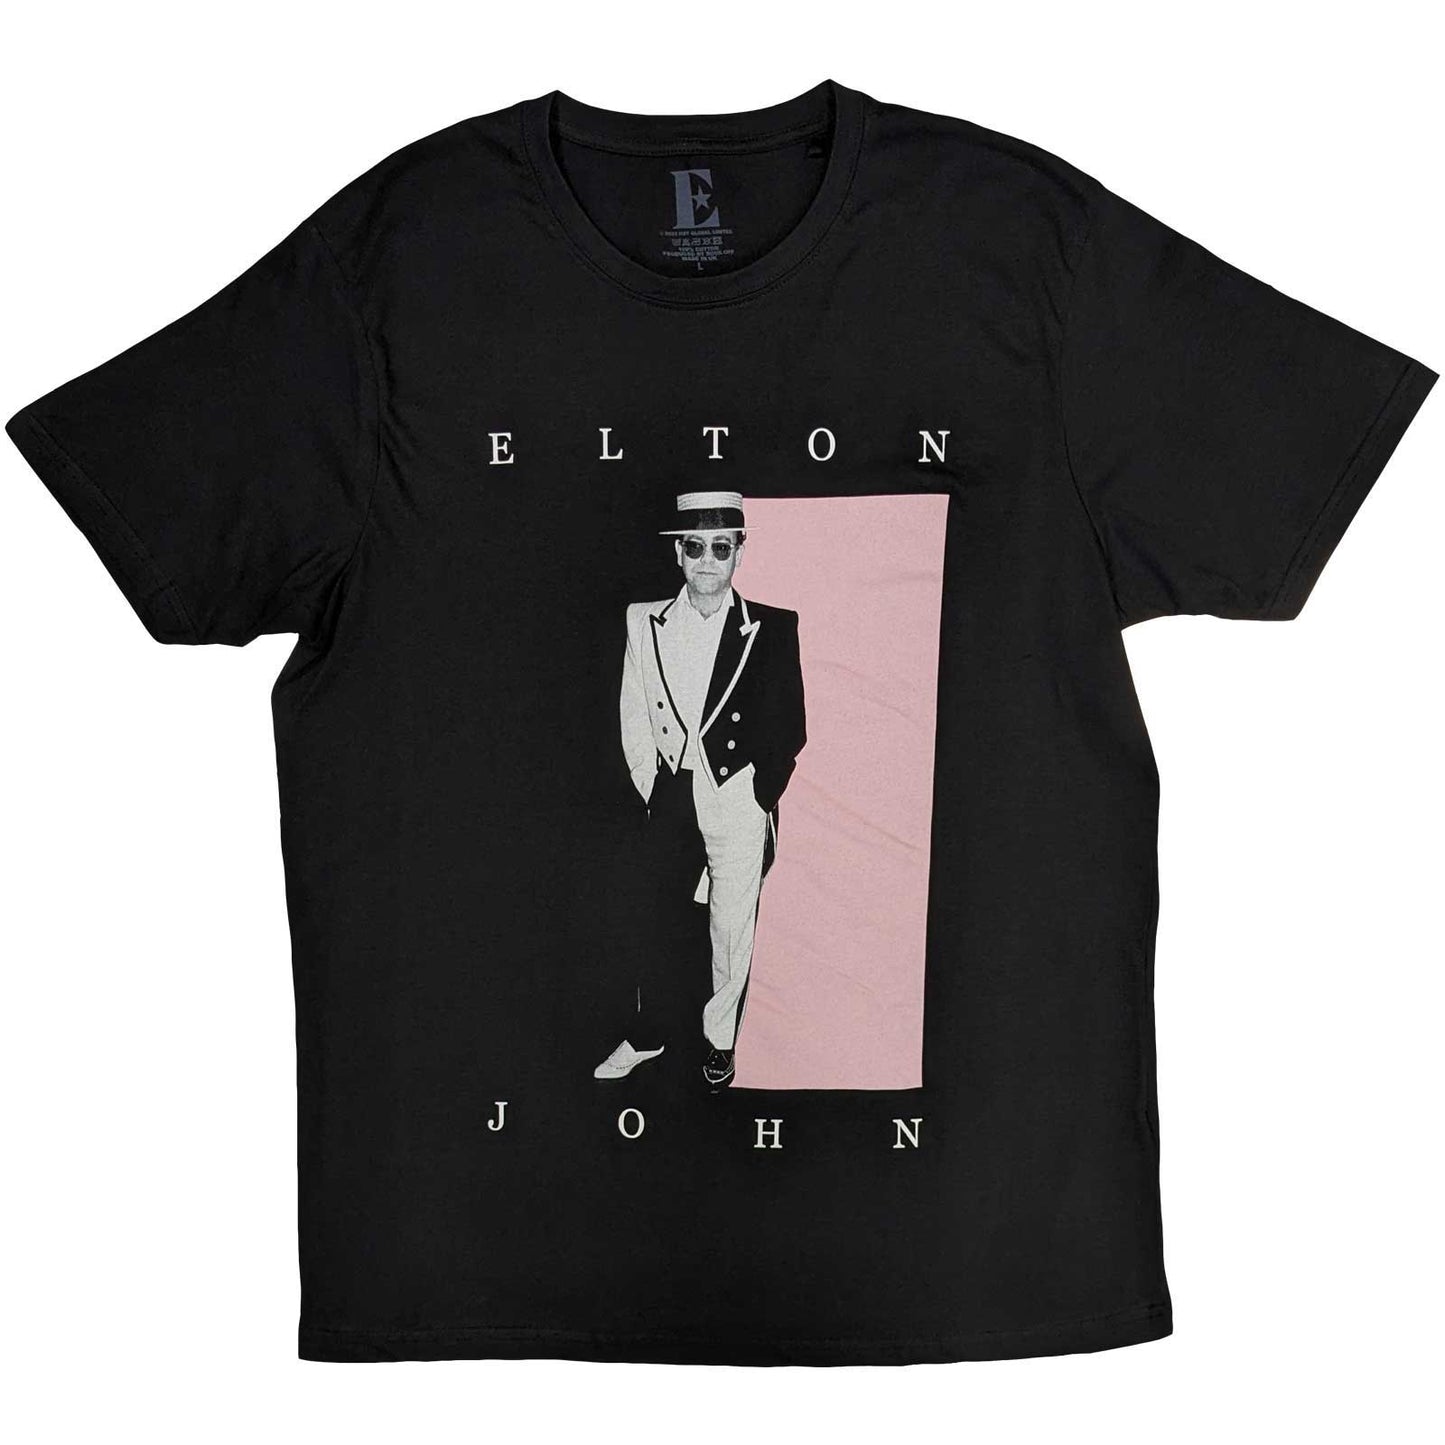 Elton John T-Shirt Tux Photo - Zhivago Gifts